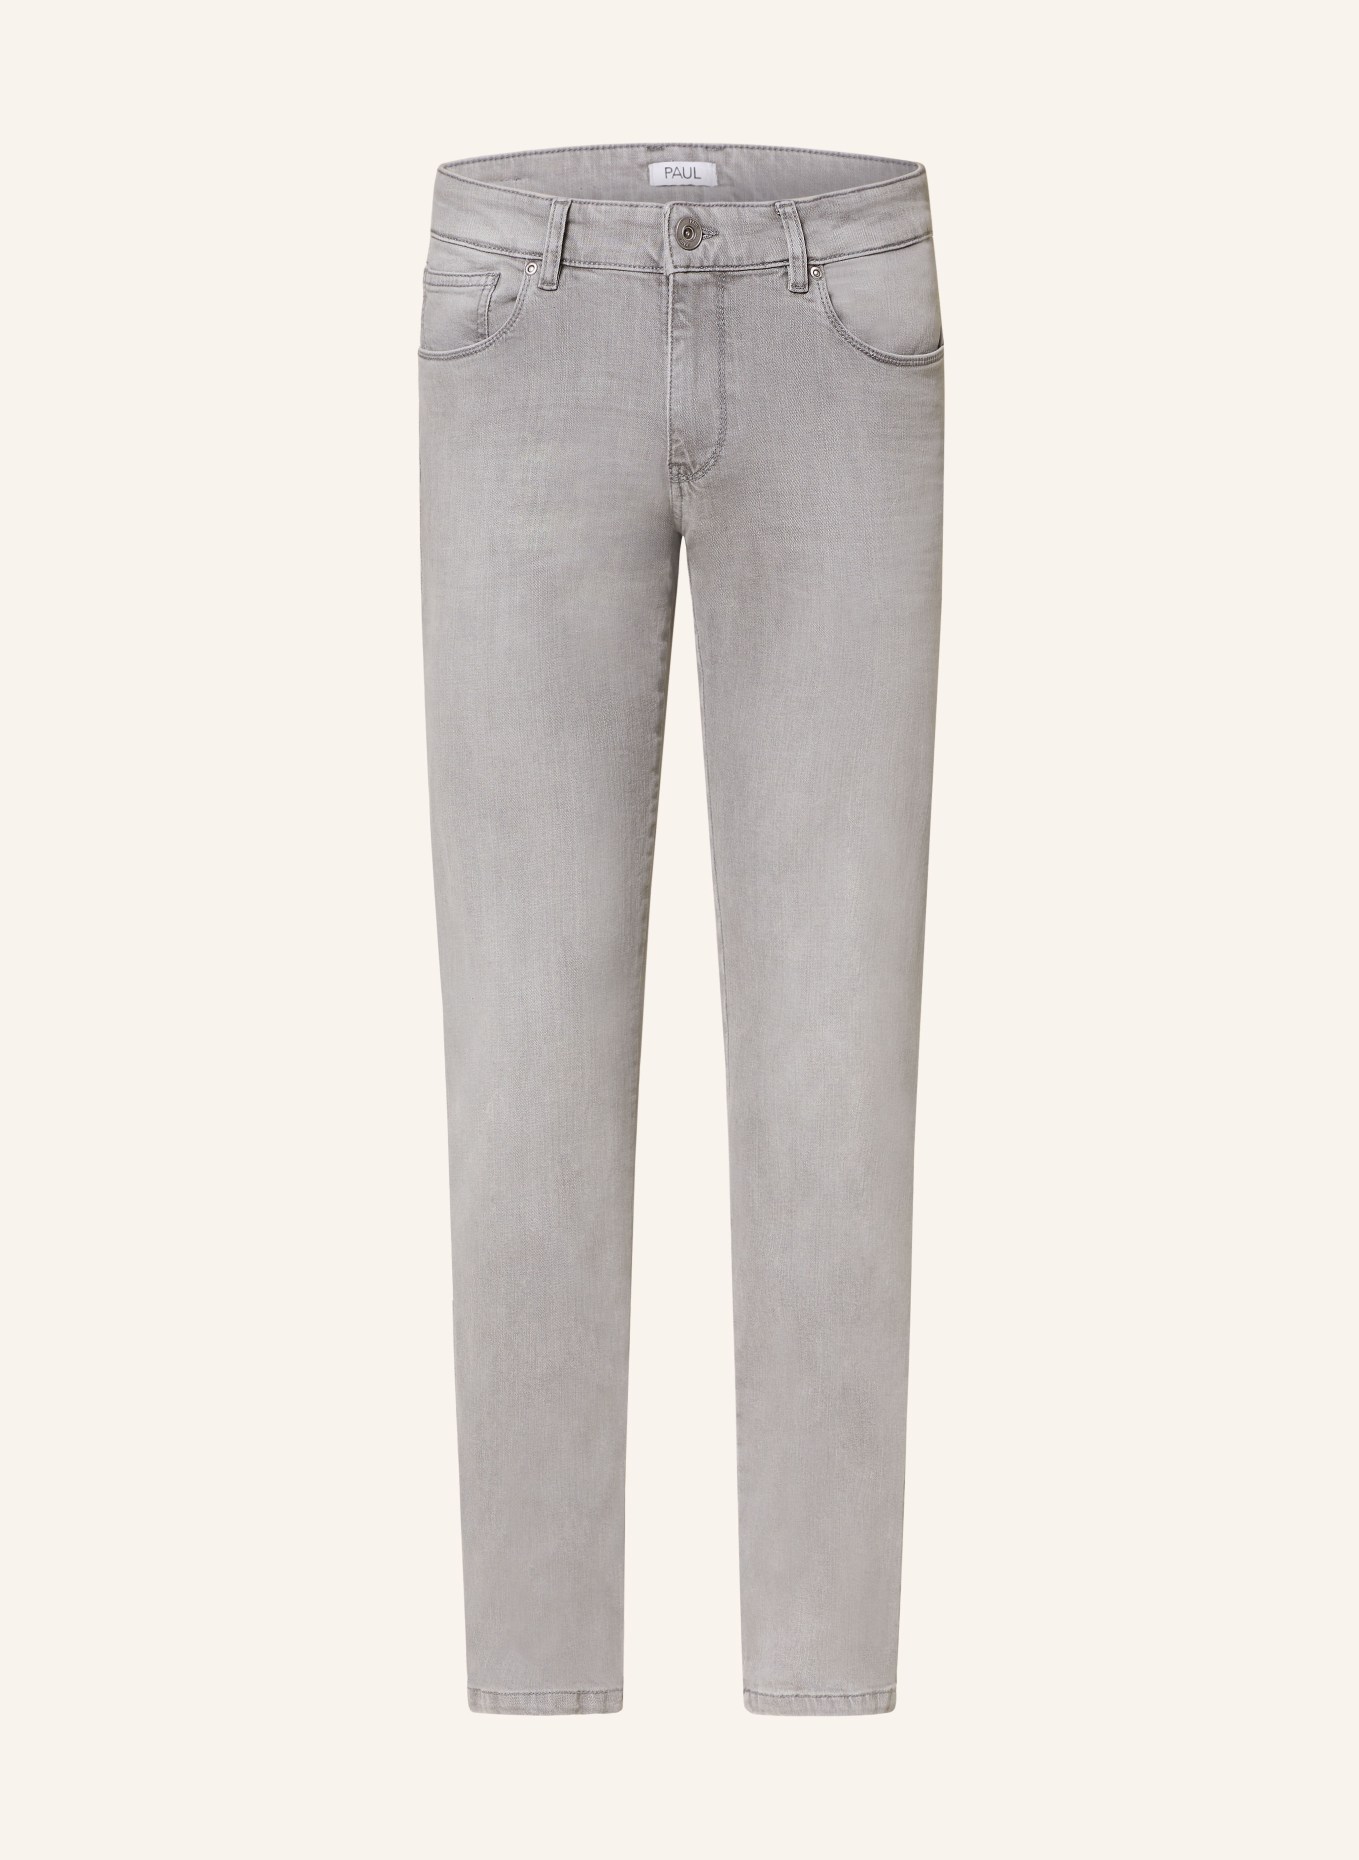 PAUL Jeans Slim Fit, Farbe: 6132 light grey (Bild 1)